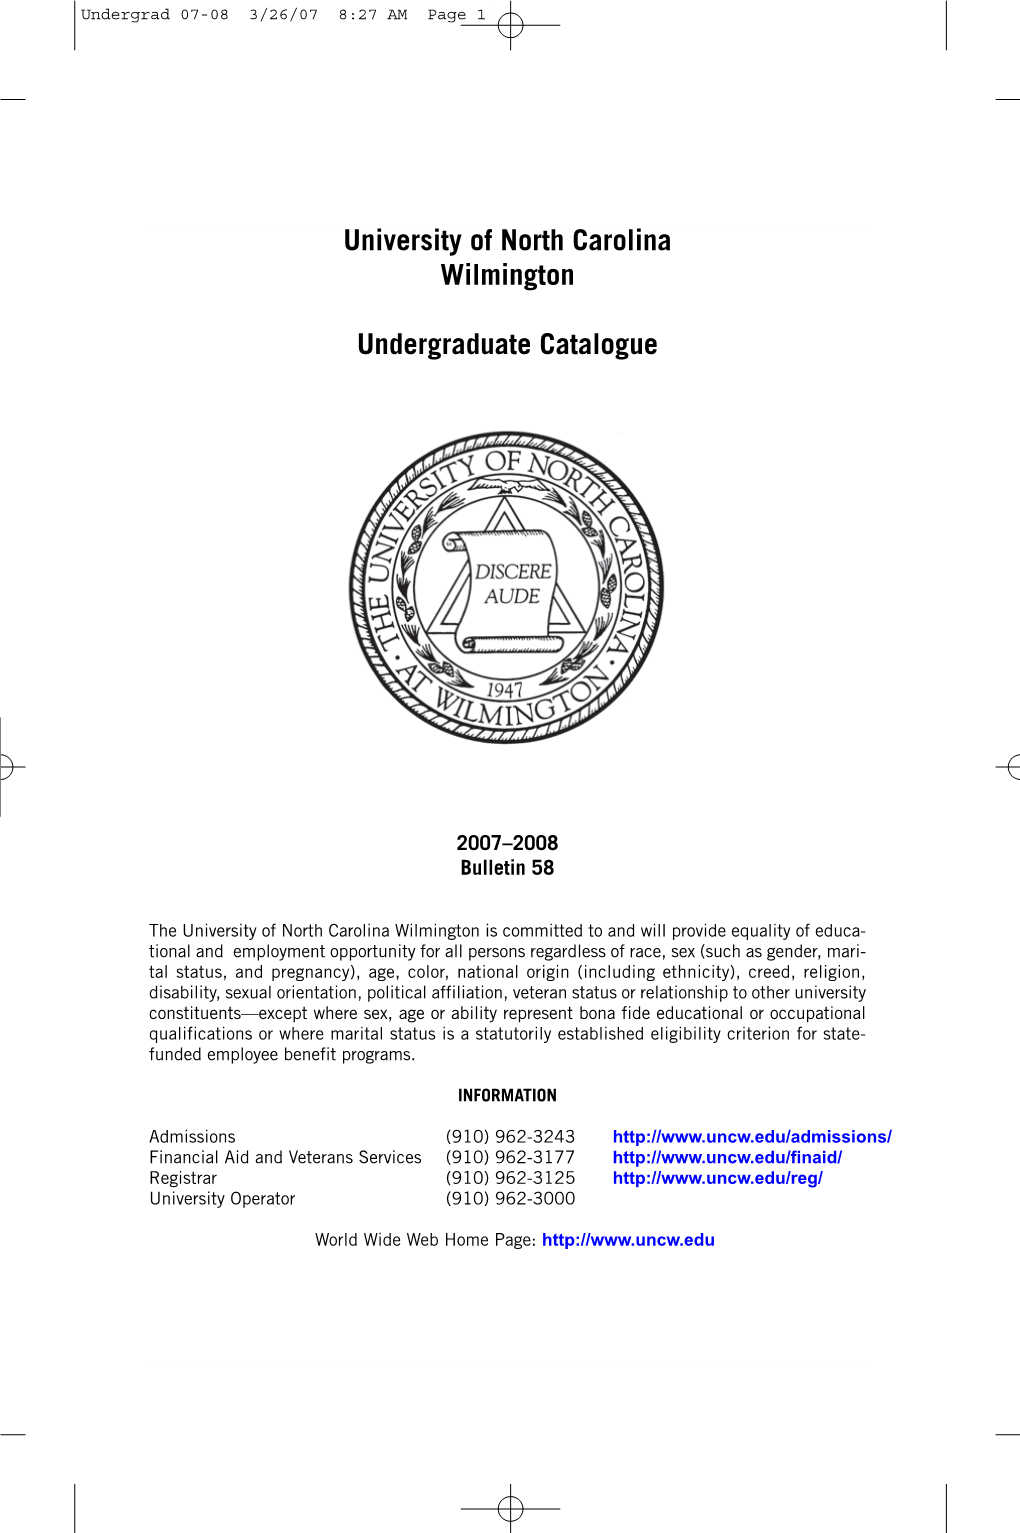 University of North Carolina Wilmington Undergraduate Catalogue